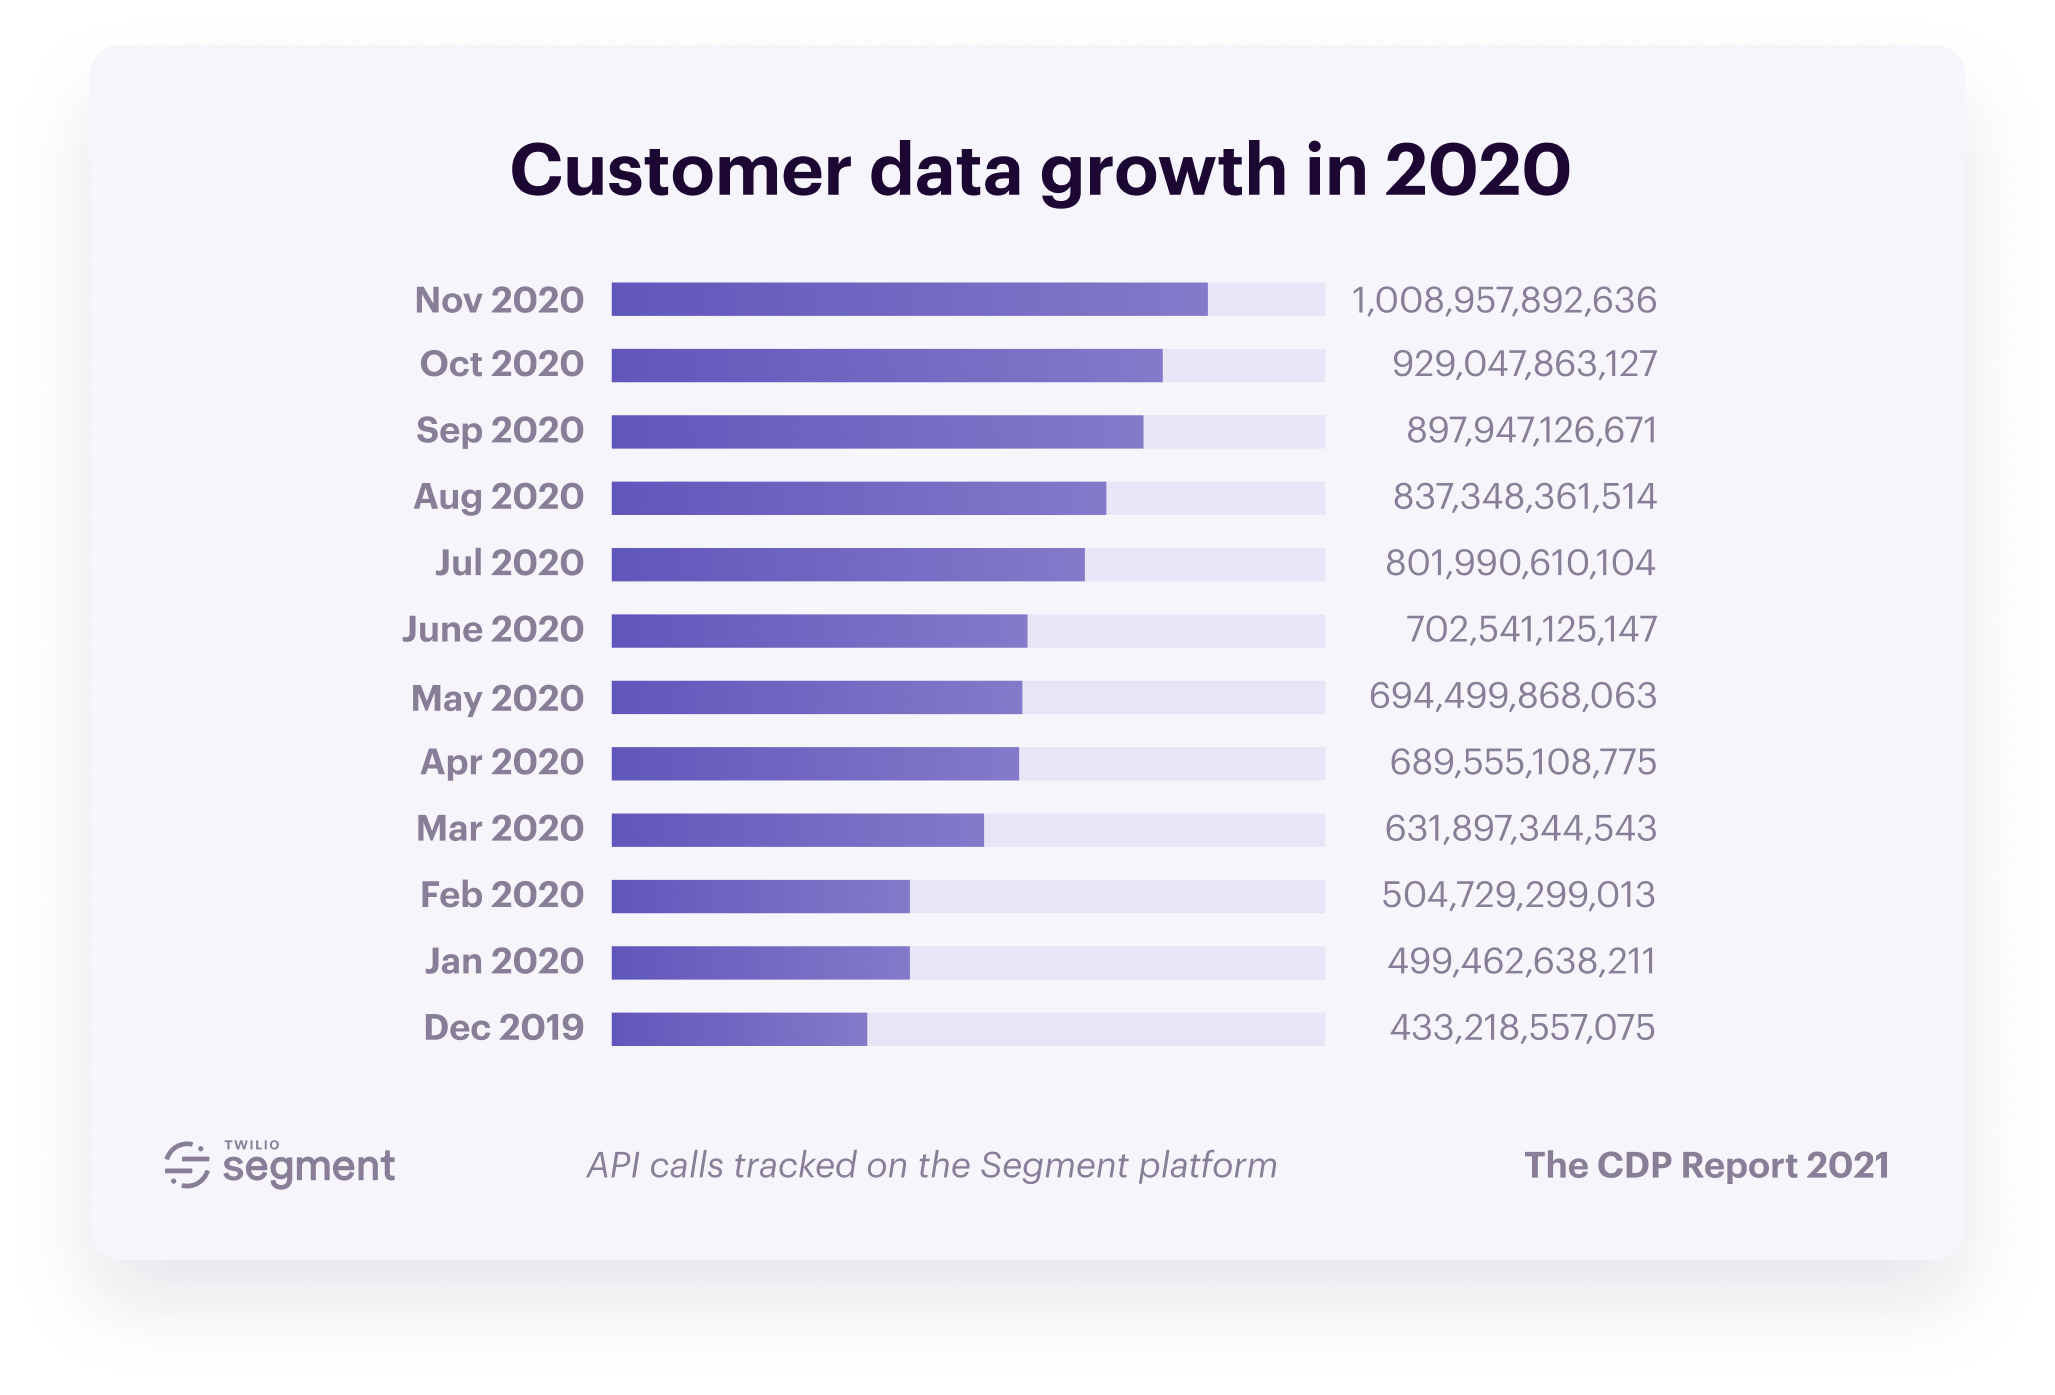 The Customer Data Platform Report